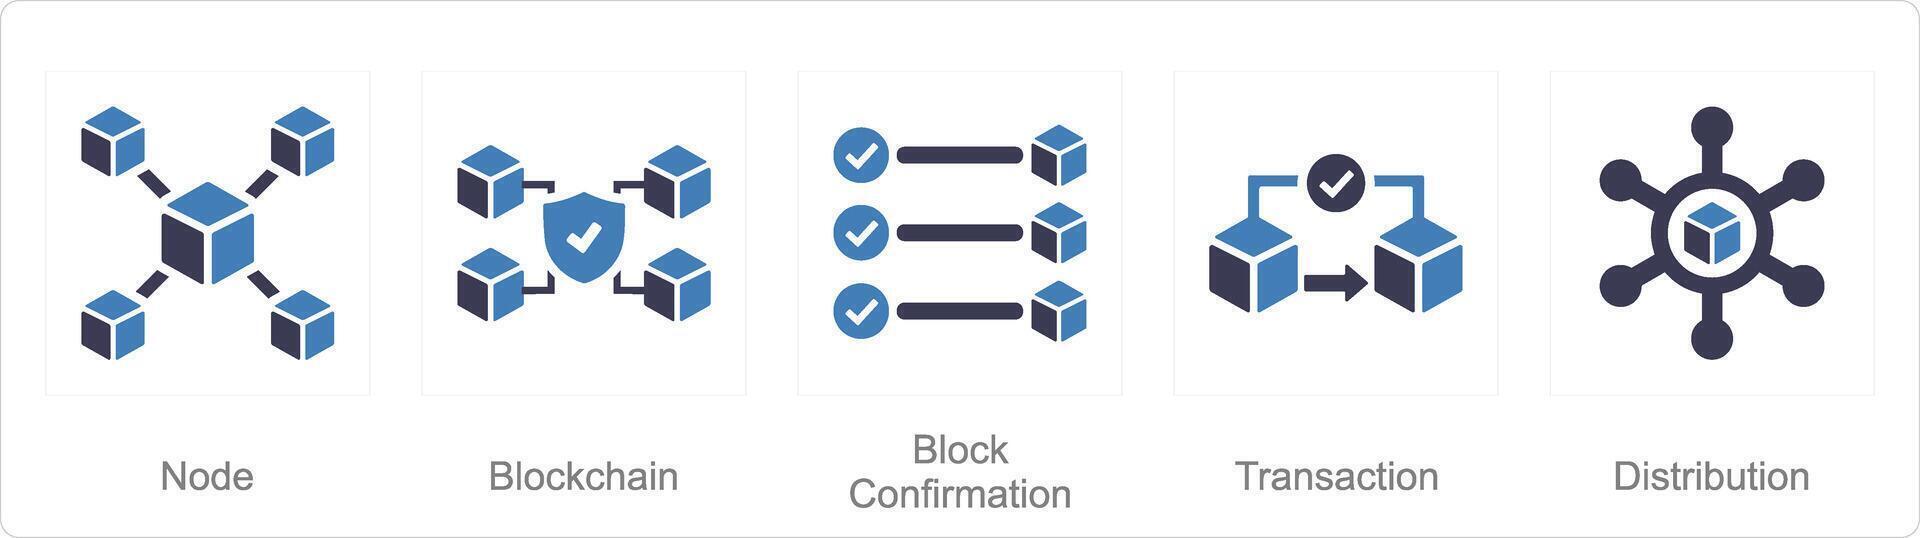 A set of 5 Blockchain icons as node, blockchain, block confirmation vector